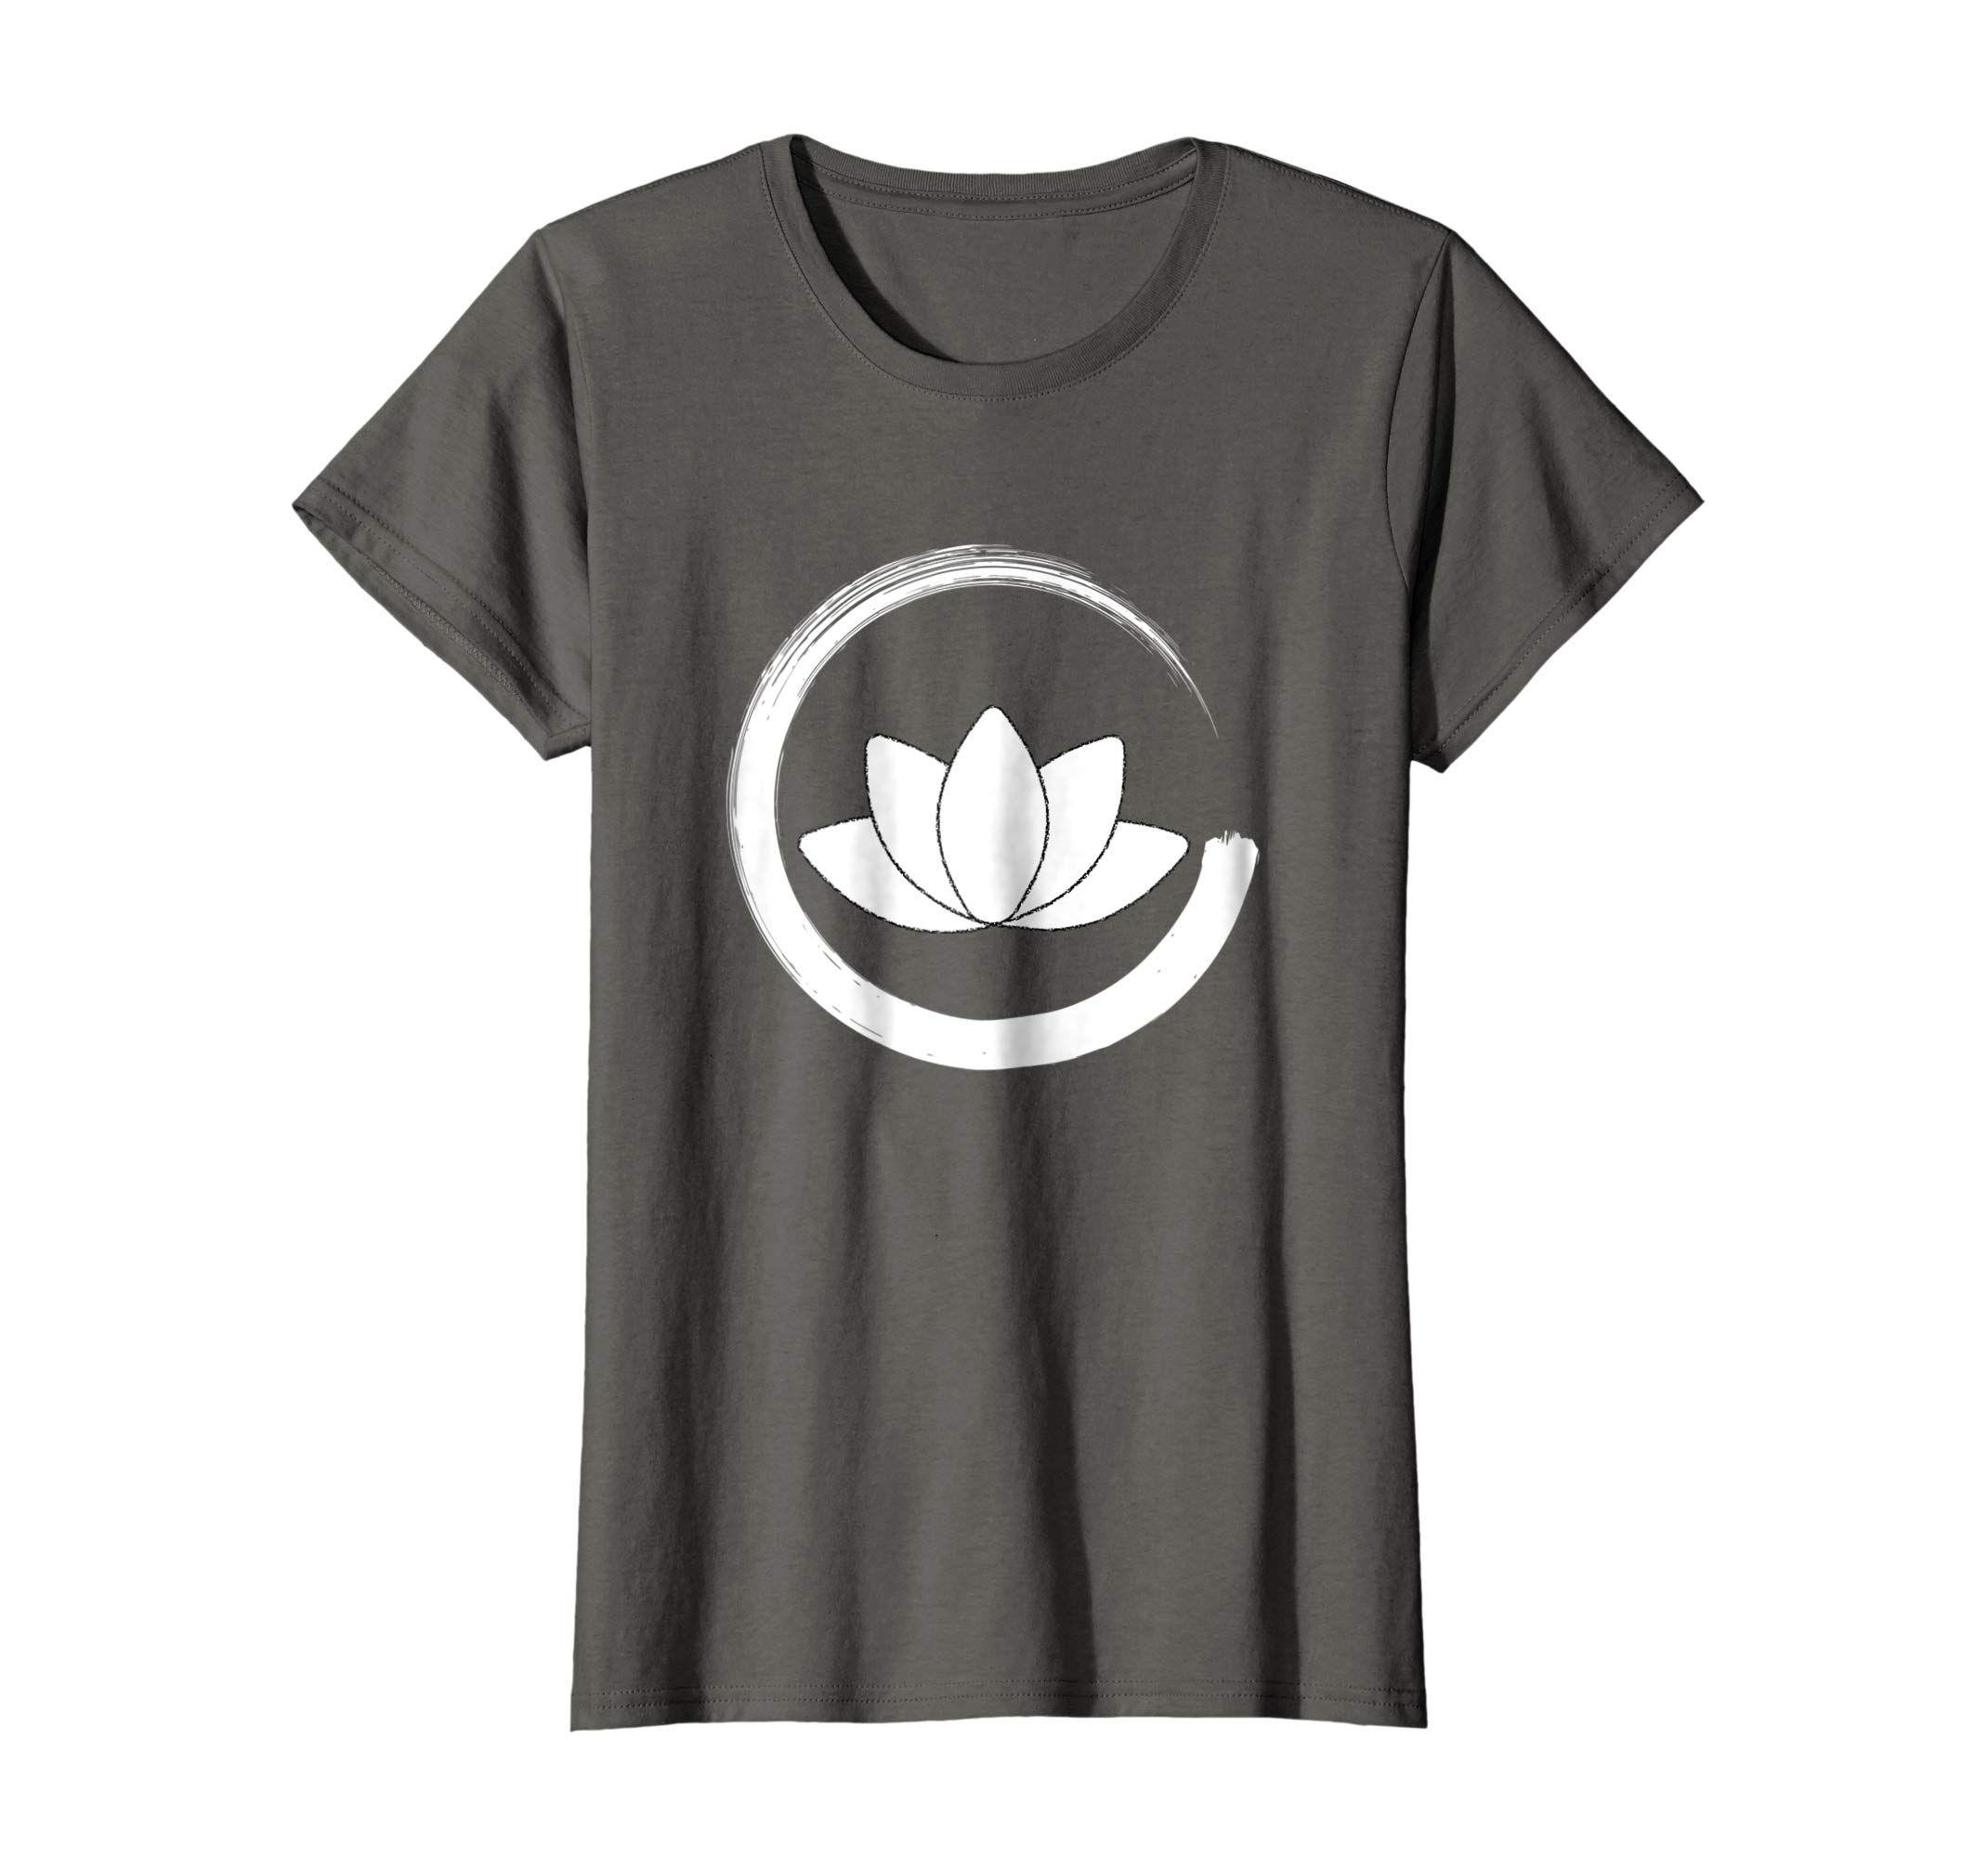 Zen Buddhist Logo - Amazon.com: Lotus Symbol Shirt - Zen Buddhist Enso Circle: Clothing